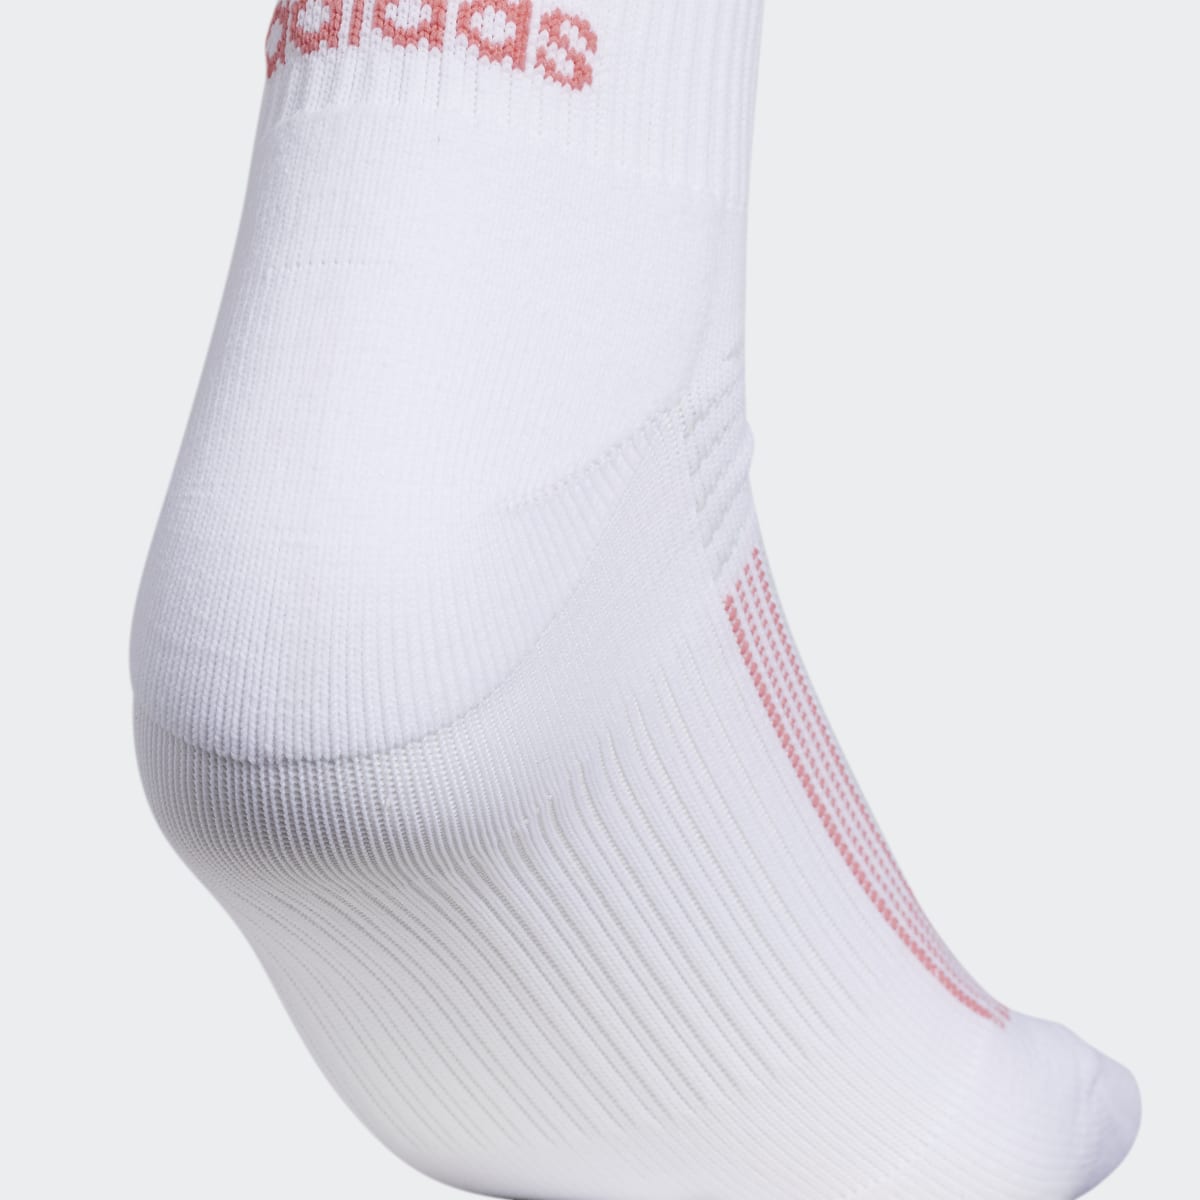 Adidas Superlite Ultraboost Quarter Socks 2 Pairs. 5